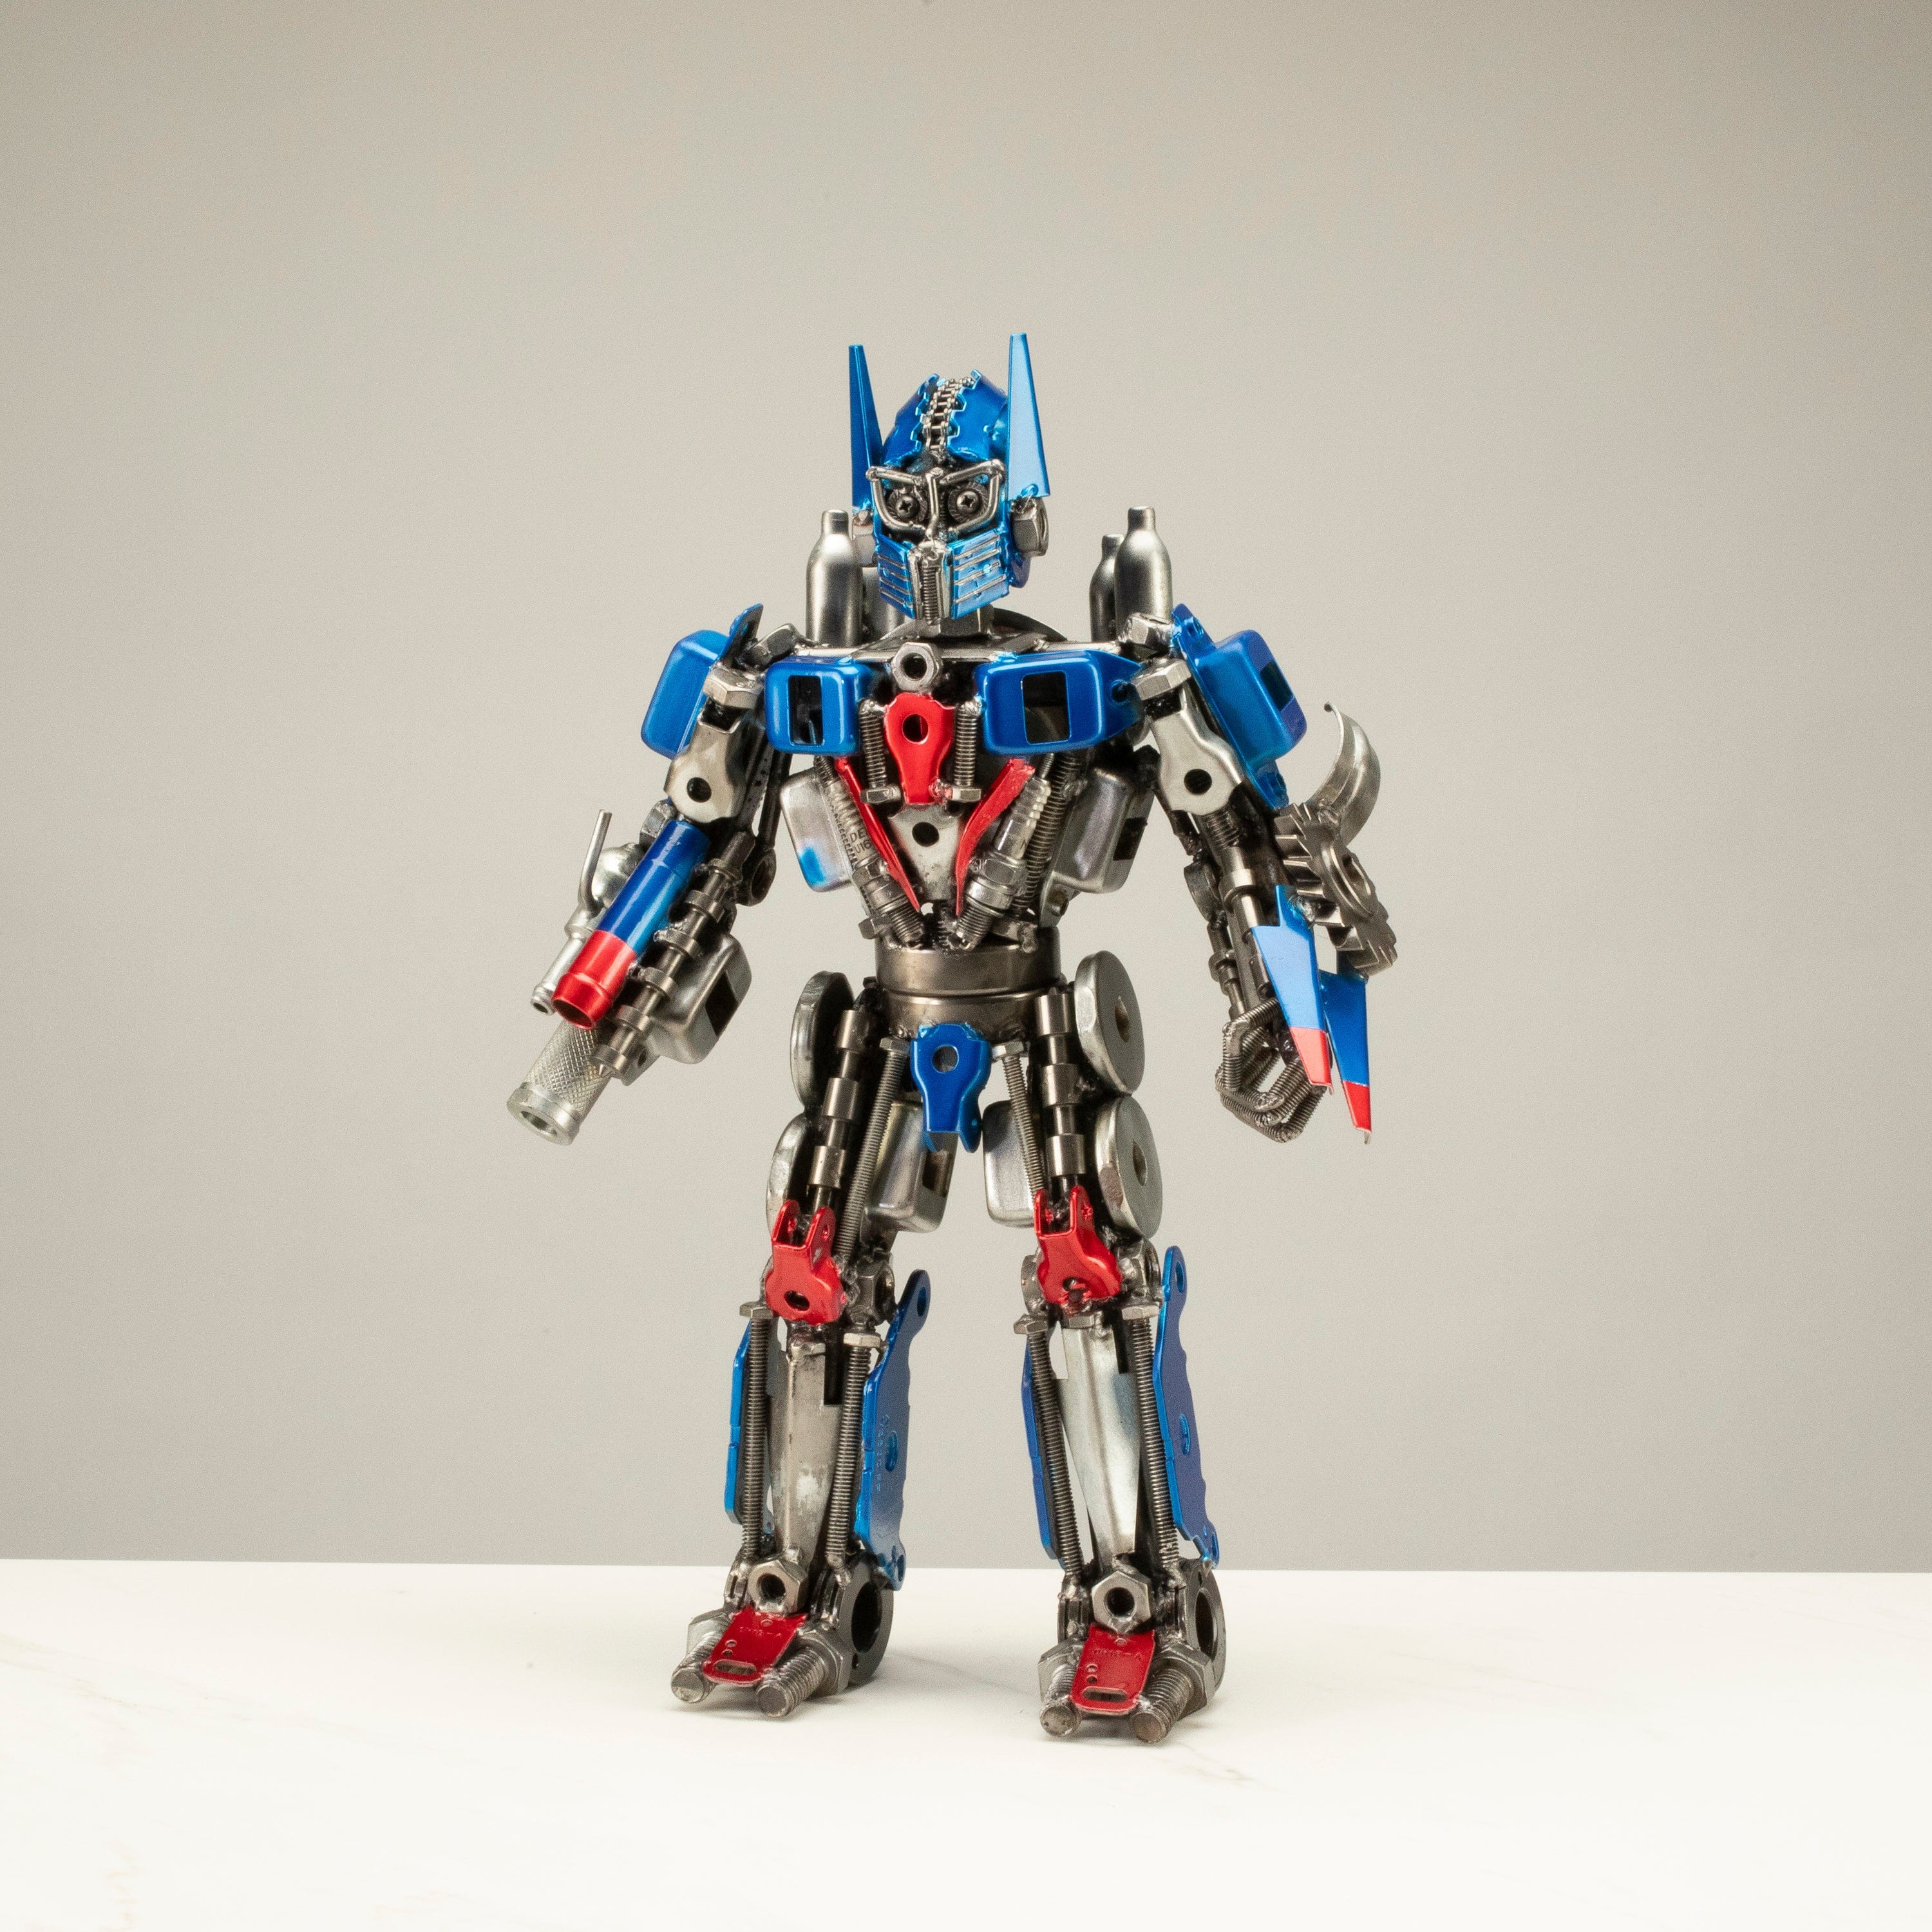 Kalifano Recycled Metal Art 16" Optimus Prime Inspired Recycled Metal Art Sculpture RMS-OP41-S